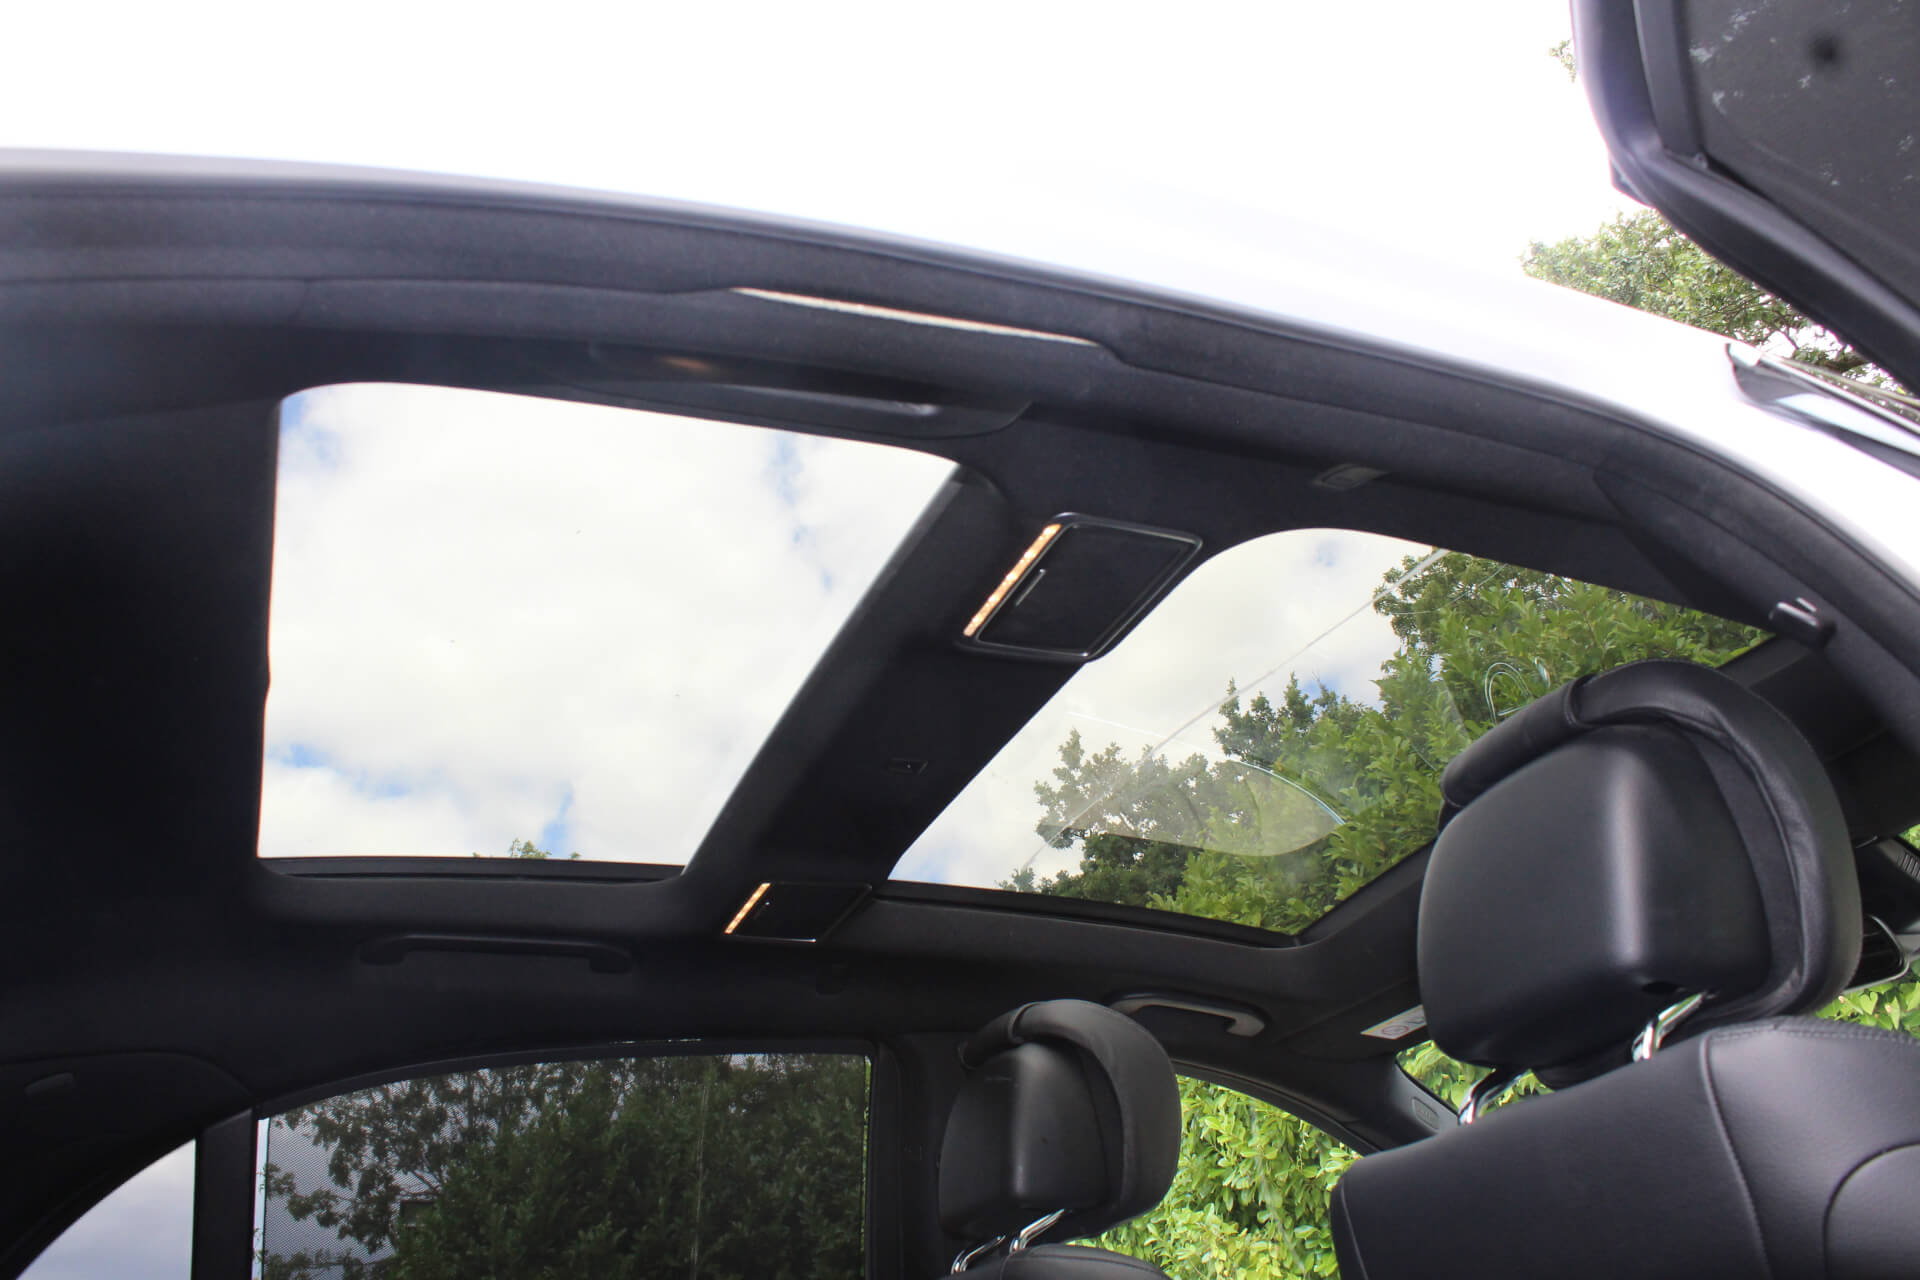 Mercedes S class panoramic sunroof